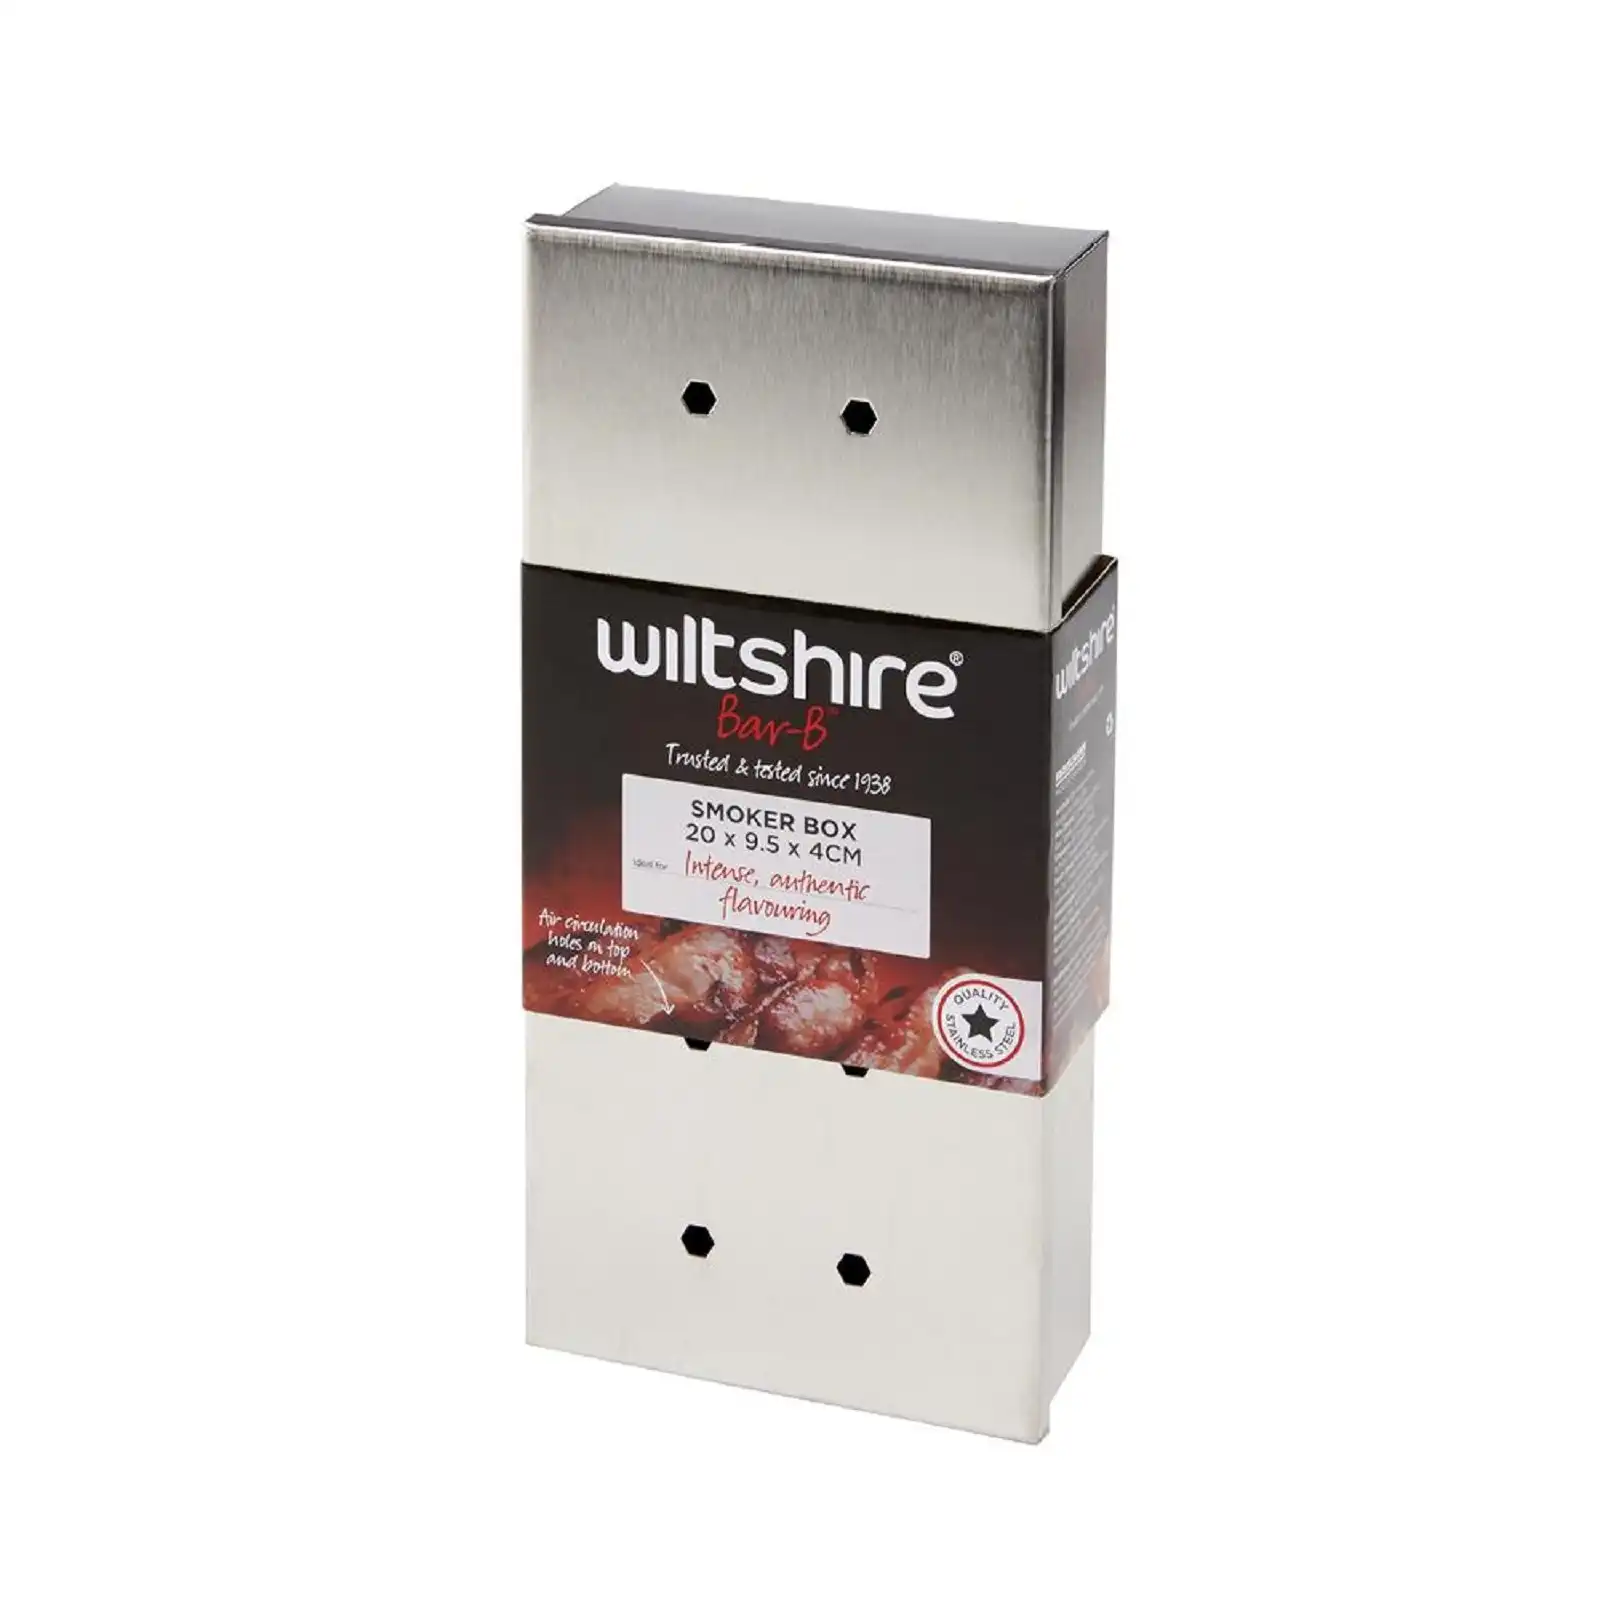 Wiltshire BBQ SMOKER BOX 20 x 9 x 4cm